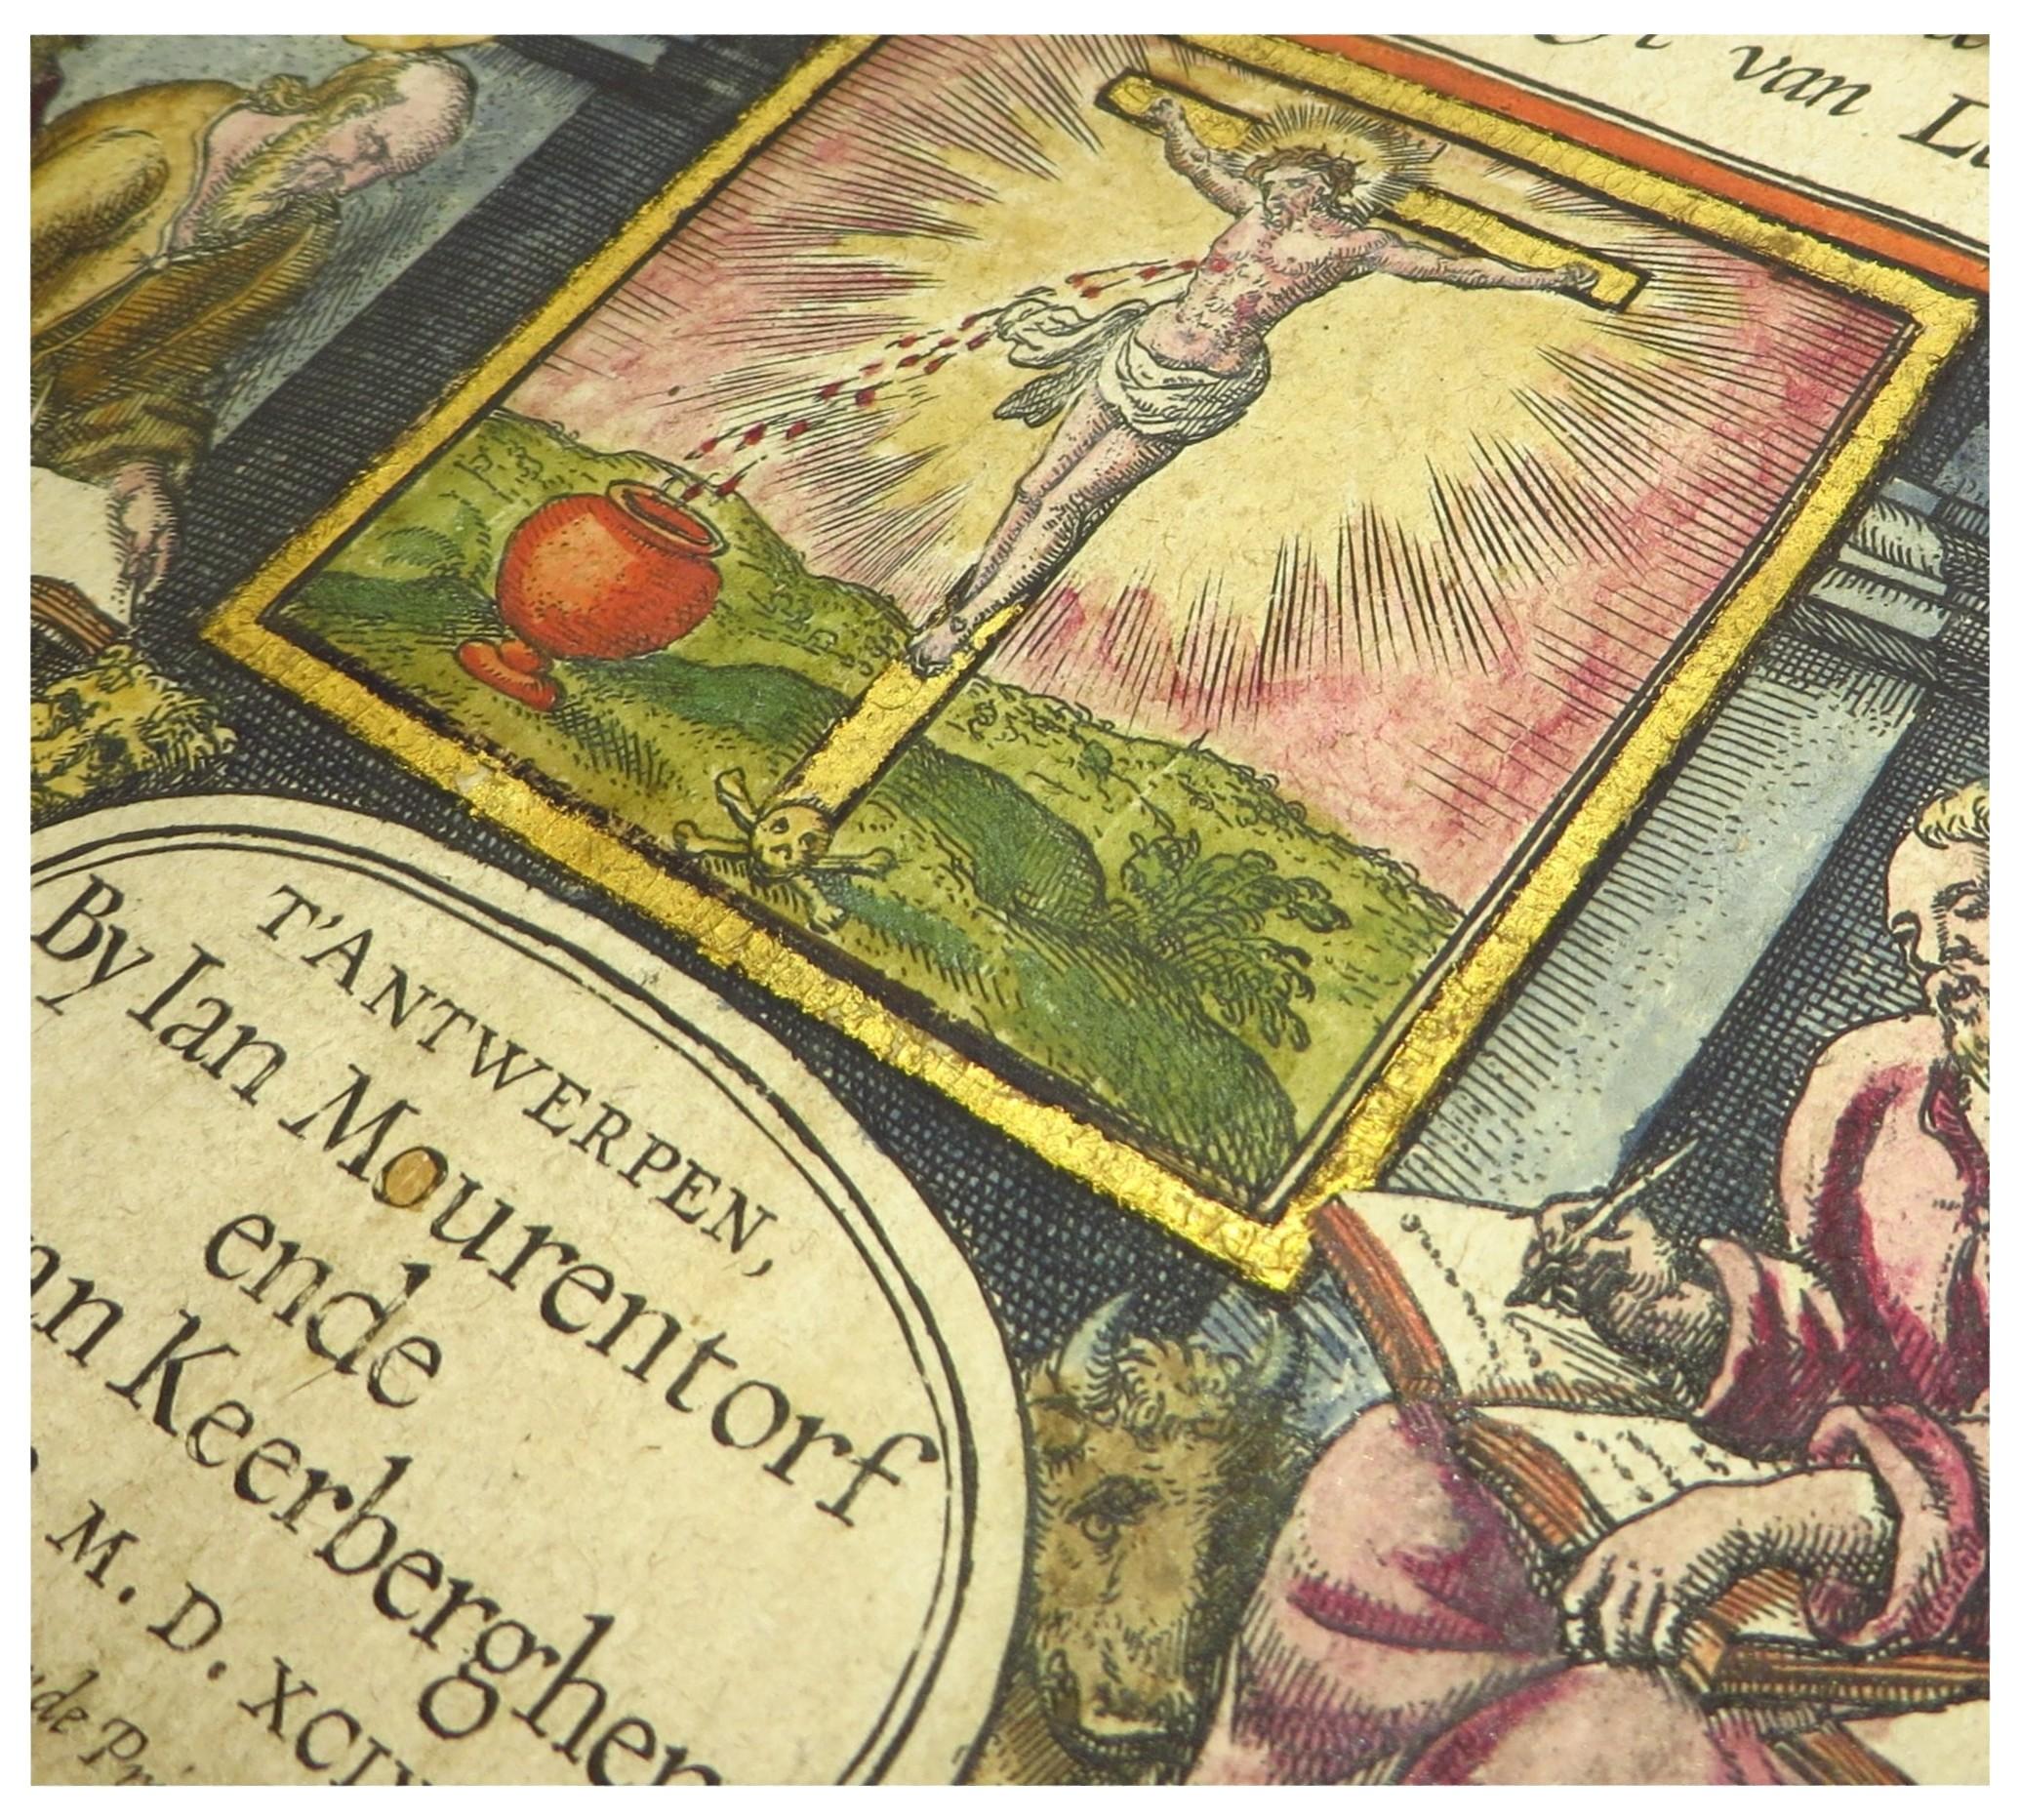 Handkoloriertes Exemplar der berühmten Moerentorf-Bibel aus dem 16. Jahrhundert (Belgisch) im Angebot